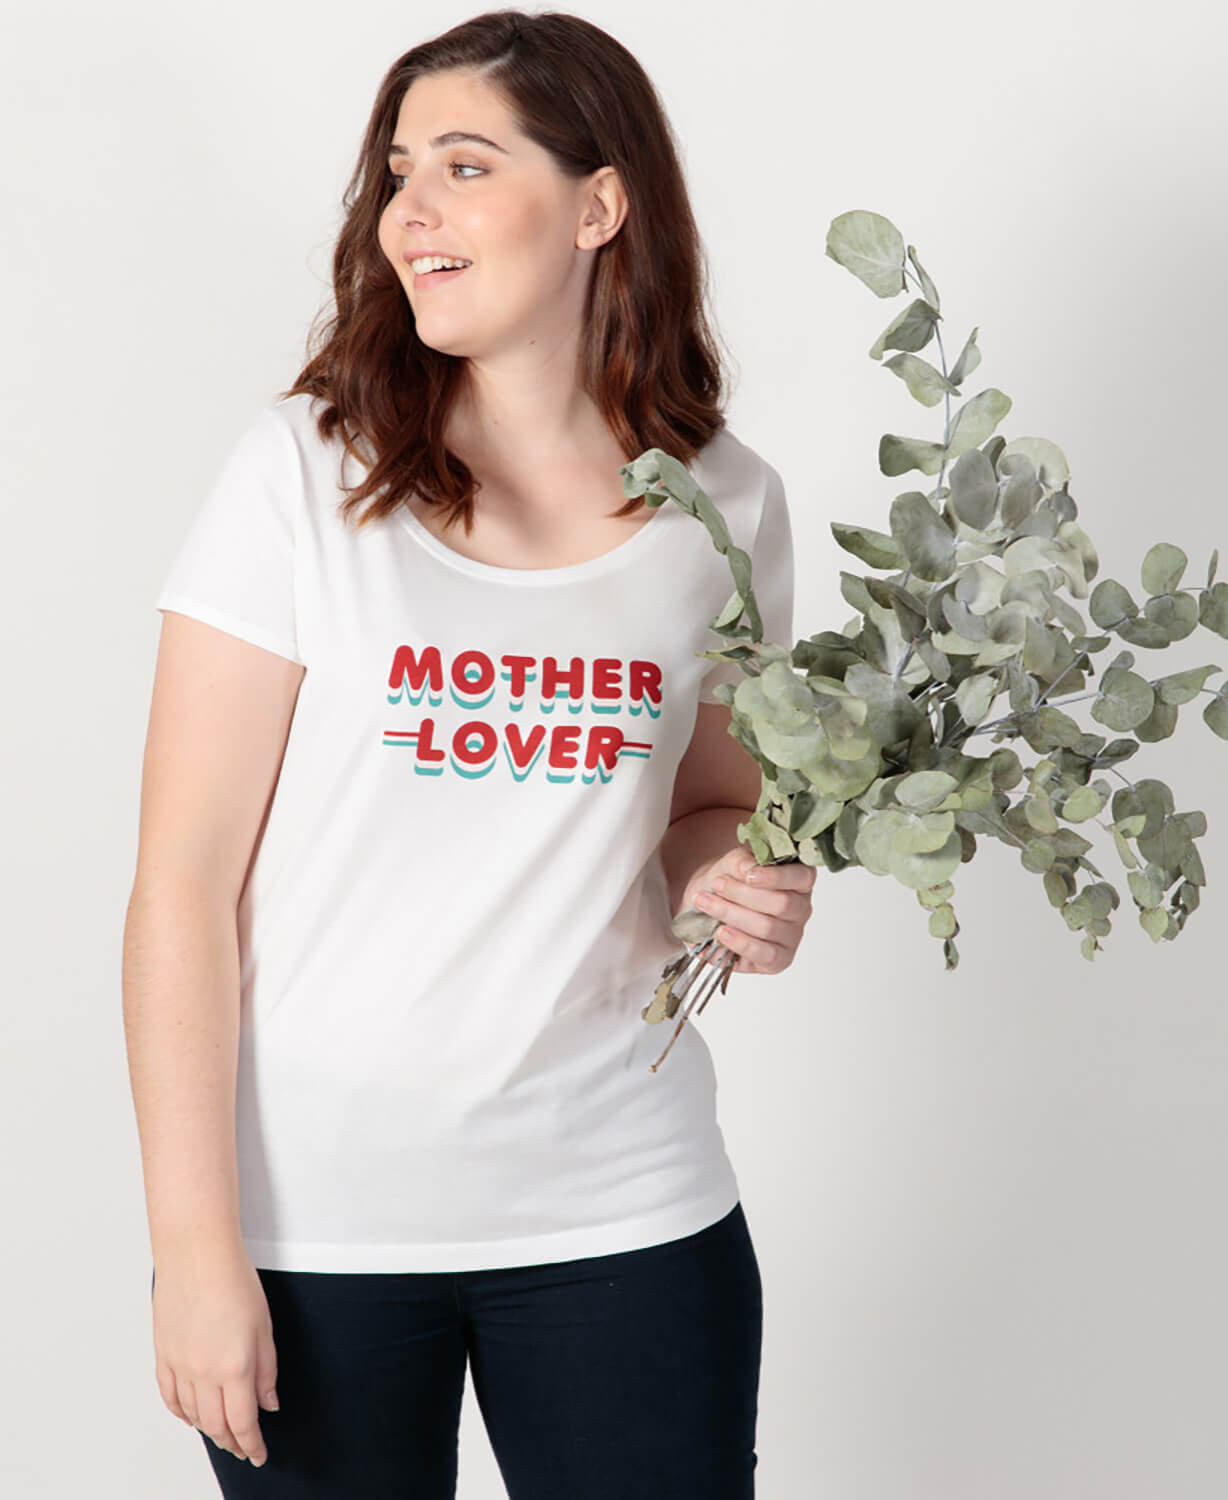 Mother Lover Pregnancy T-shirt